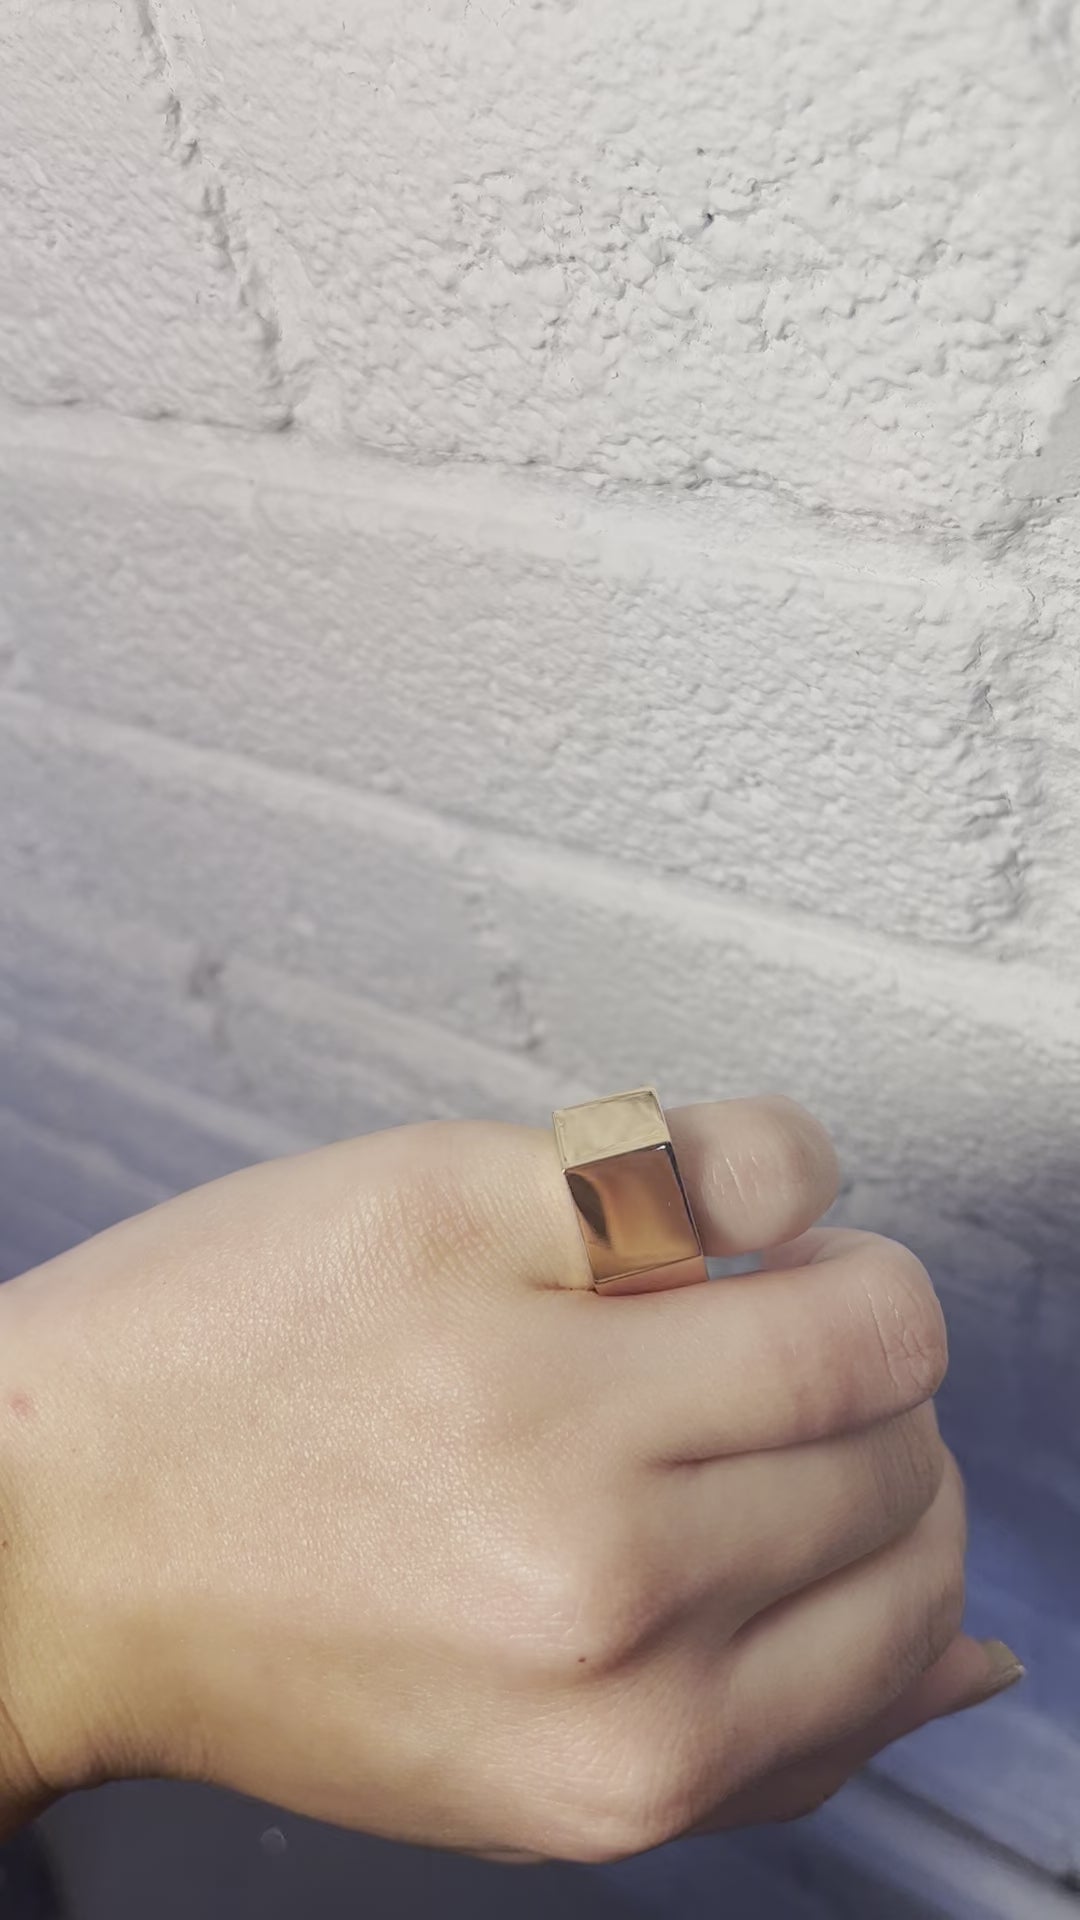 Hexagon Ring – 10k Rose Gold